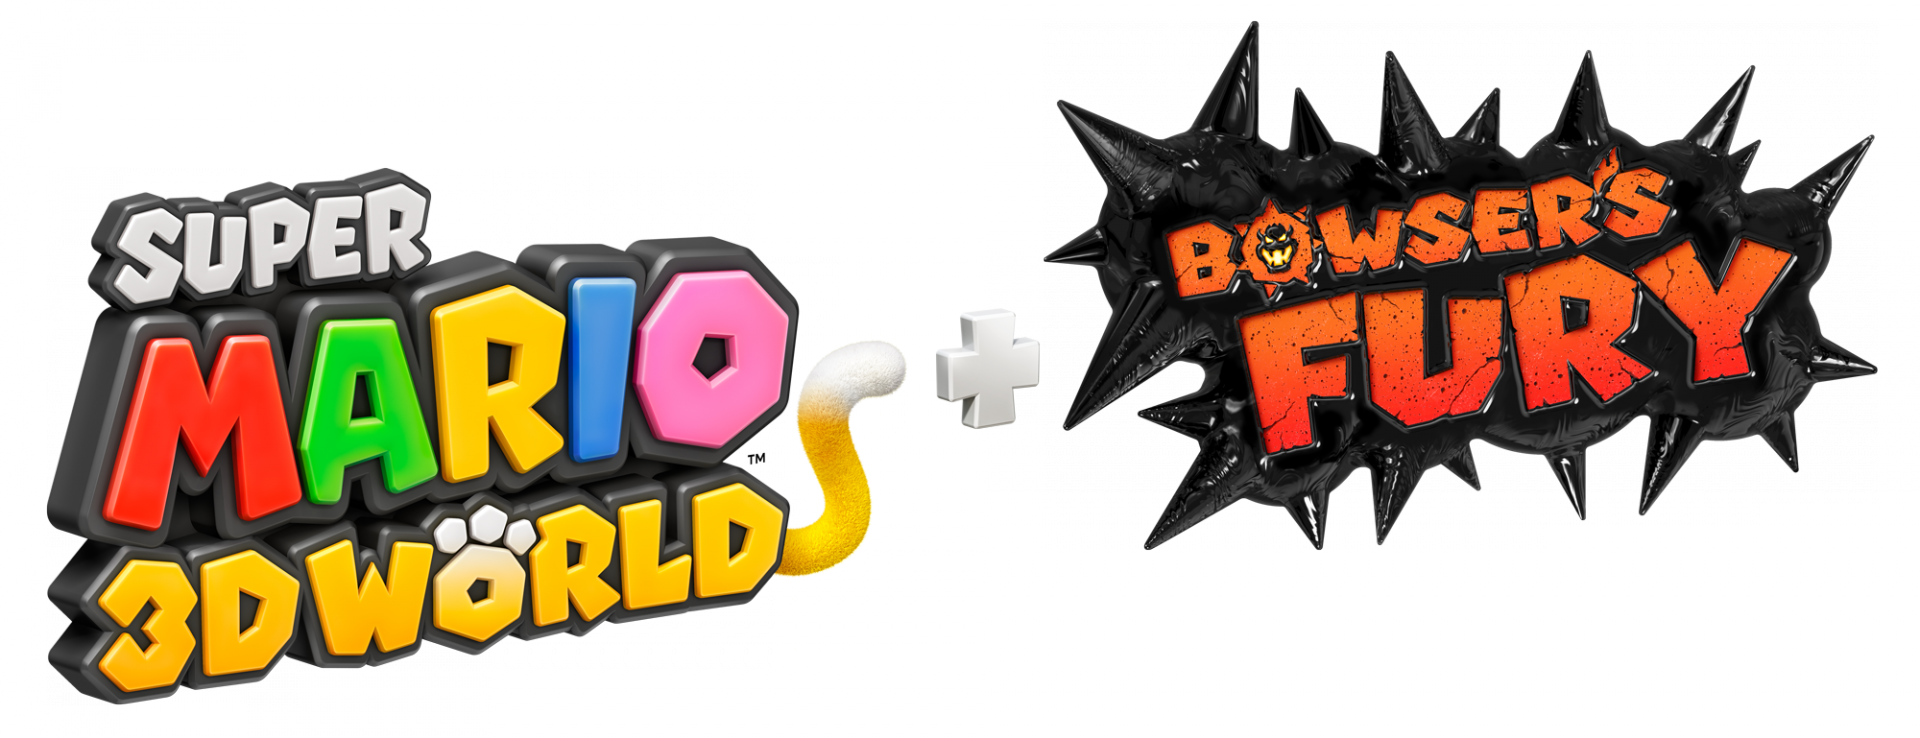 Super Mario 3d World + Bowser's Fury. Марио Bowser Fury. Игра super Mario 3d World Bowser's Fury Switch. Super Mario 3d World Bowser's Fury картридж. Super mario fury